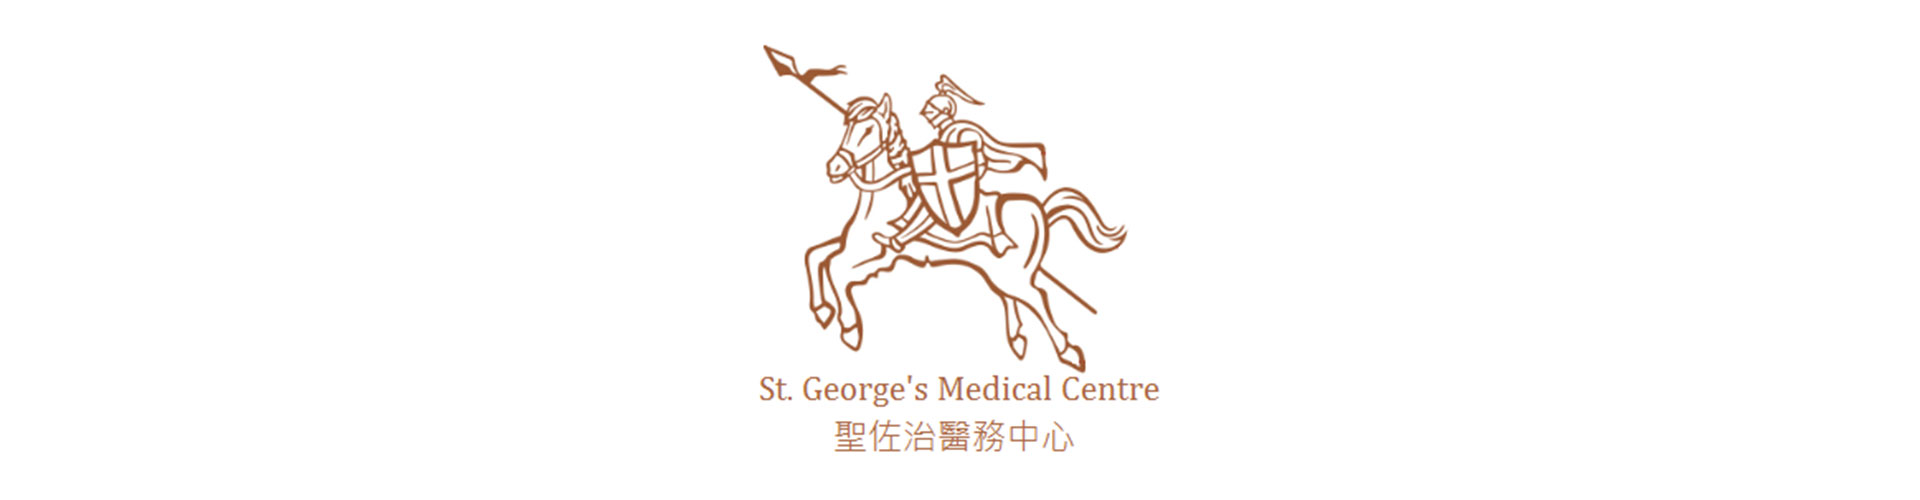 St. George's Medical Centre